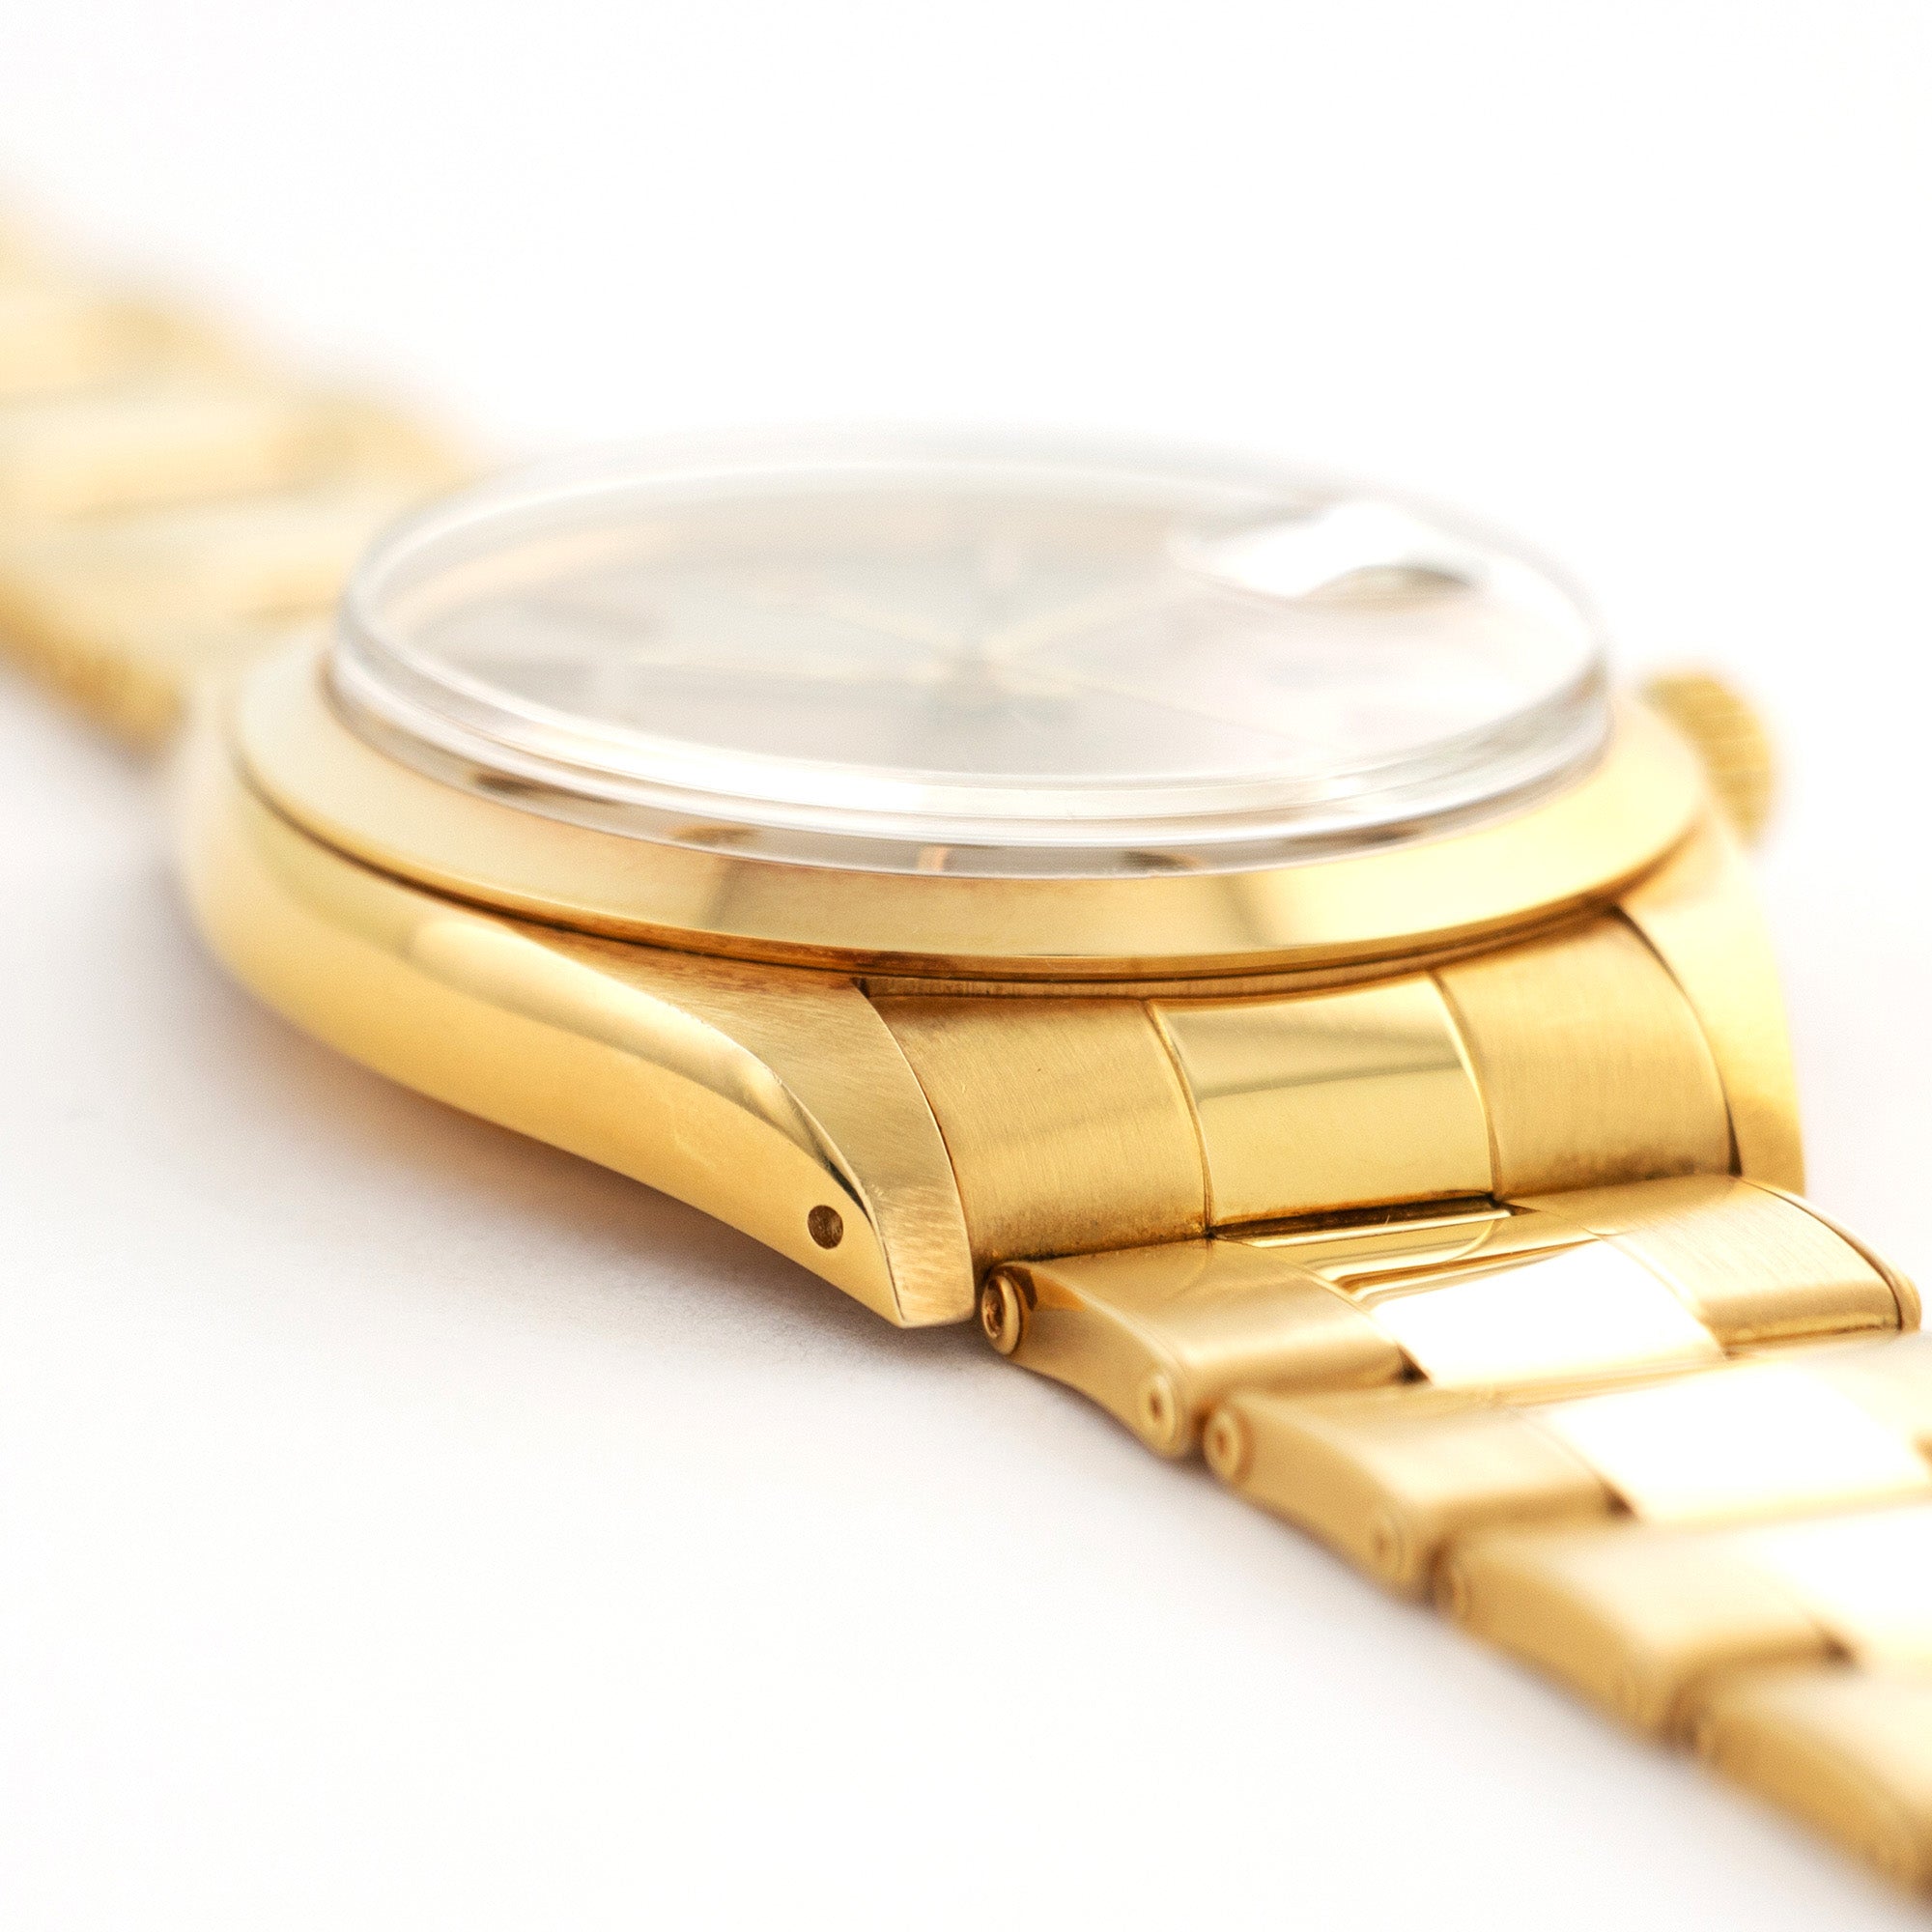 Rolex - Rolex Yellow Gold Date Watch Ref. 1500 with Original Warranty Paper - The Keystone Watches